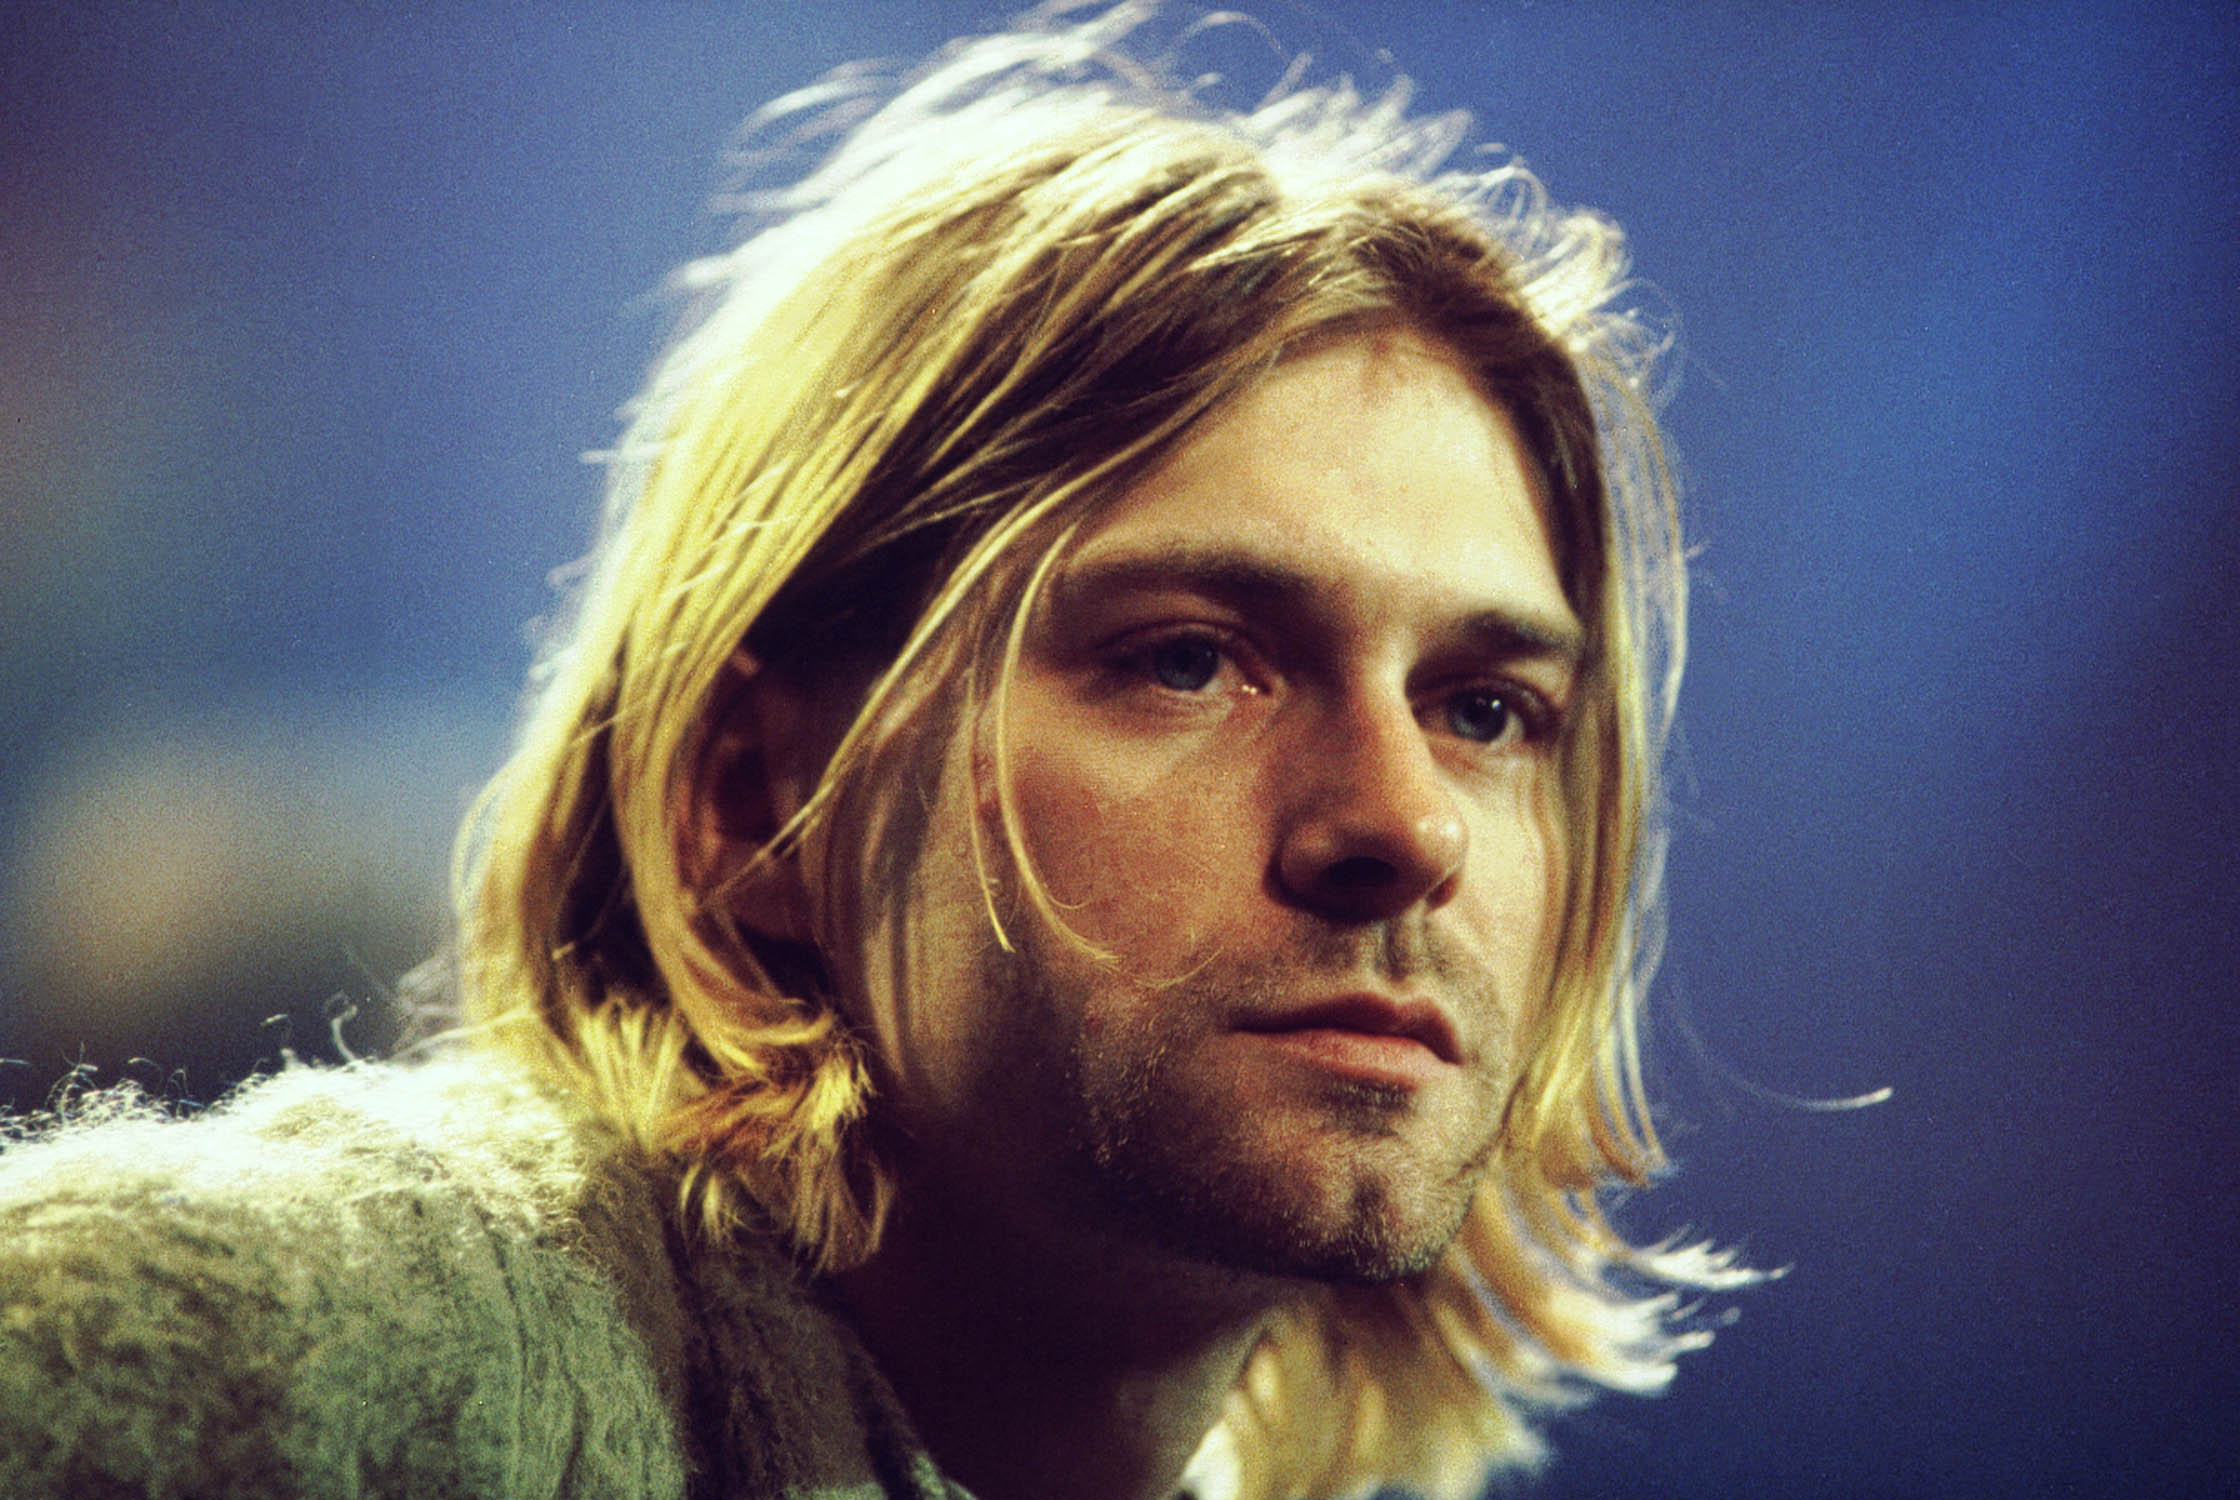 Nirvana's Kurt Cobain wearing a sweater